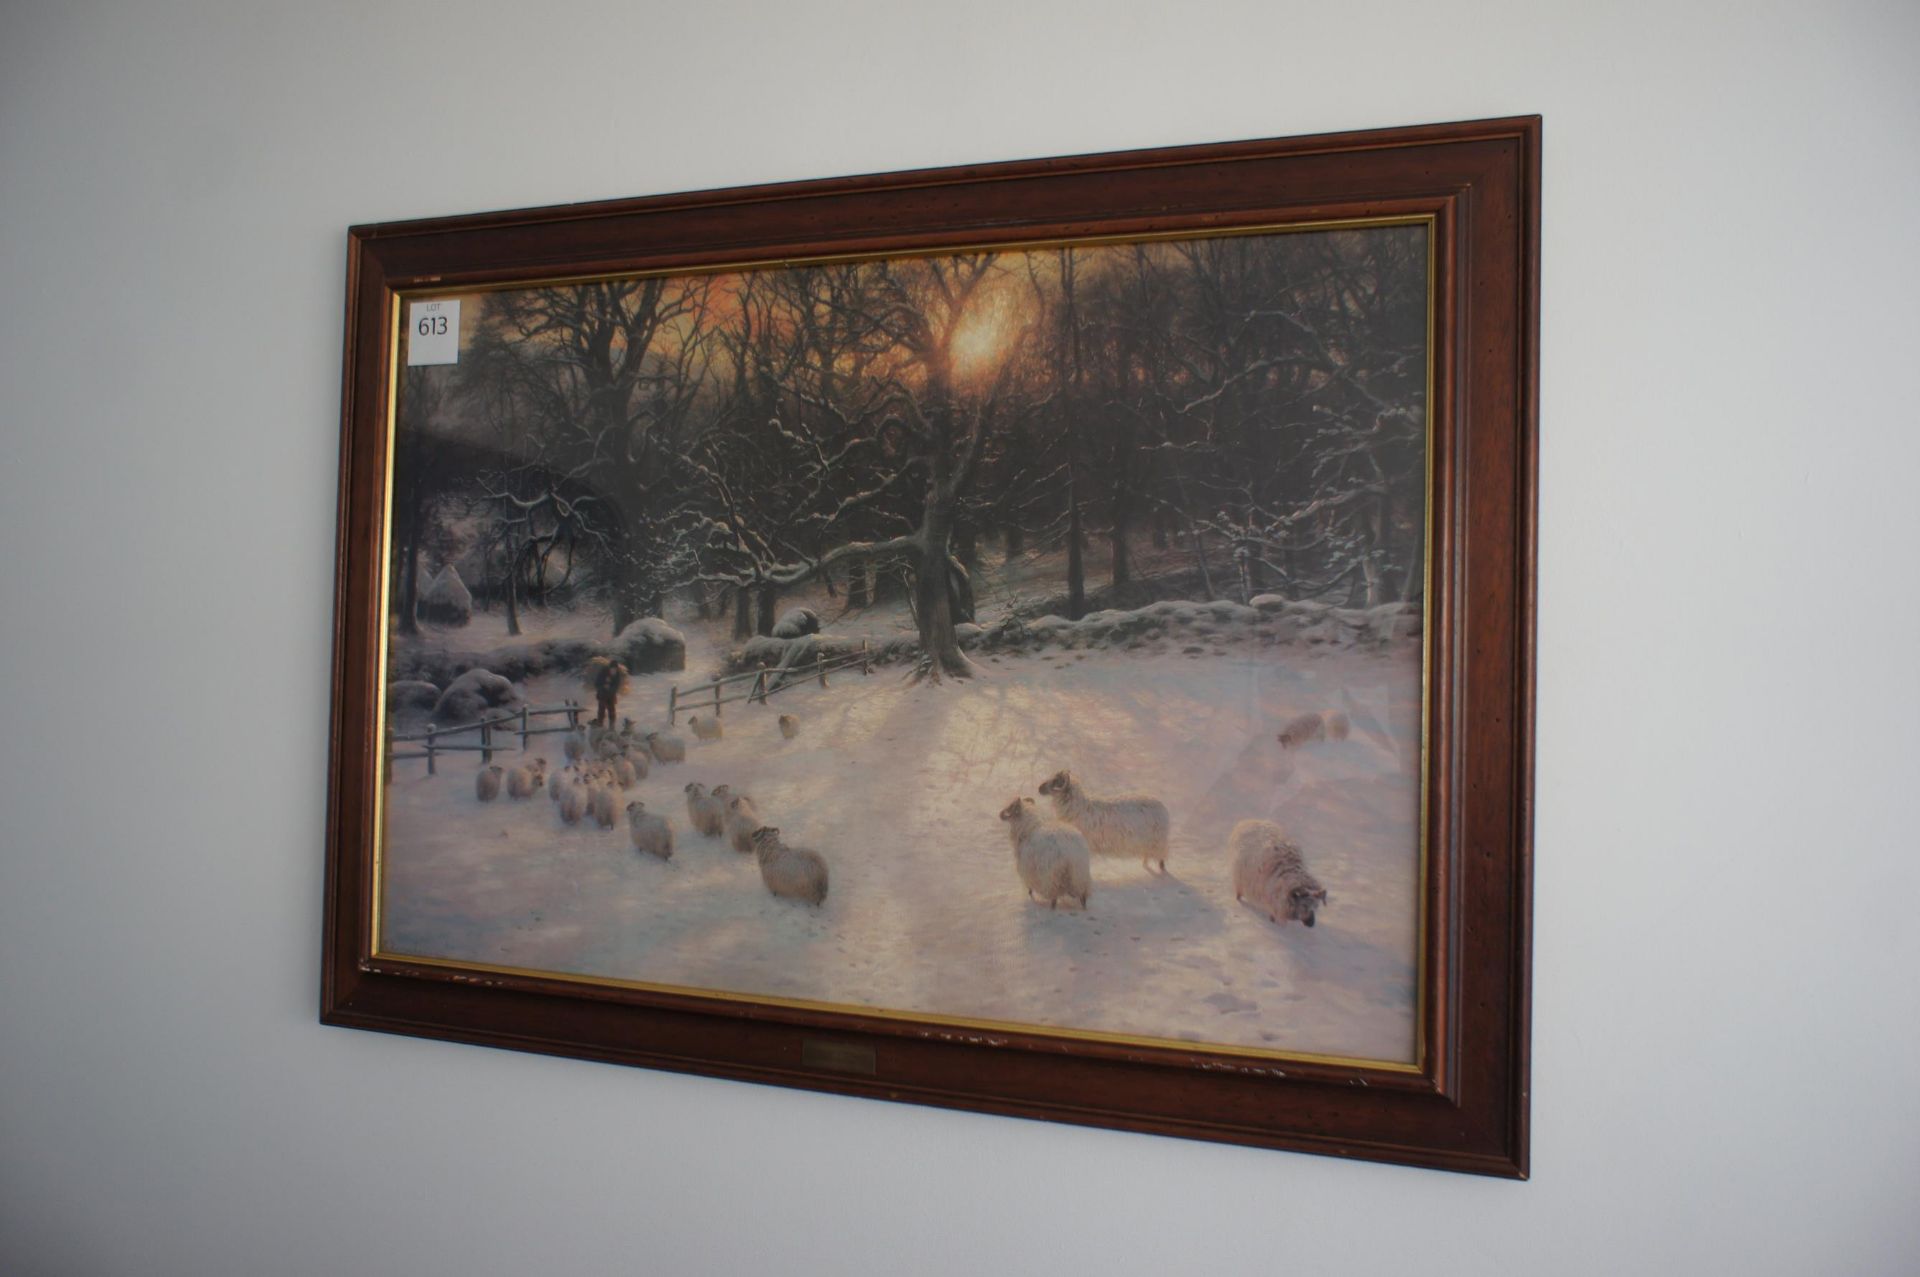 Joseph Farouharson “Shortening Winter Day” Framed and Glazed Print (865mm x 620mm) - Image 2 of 4